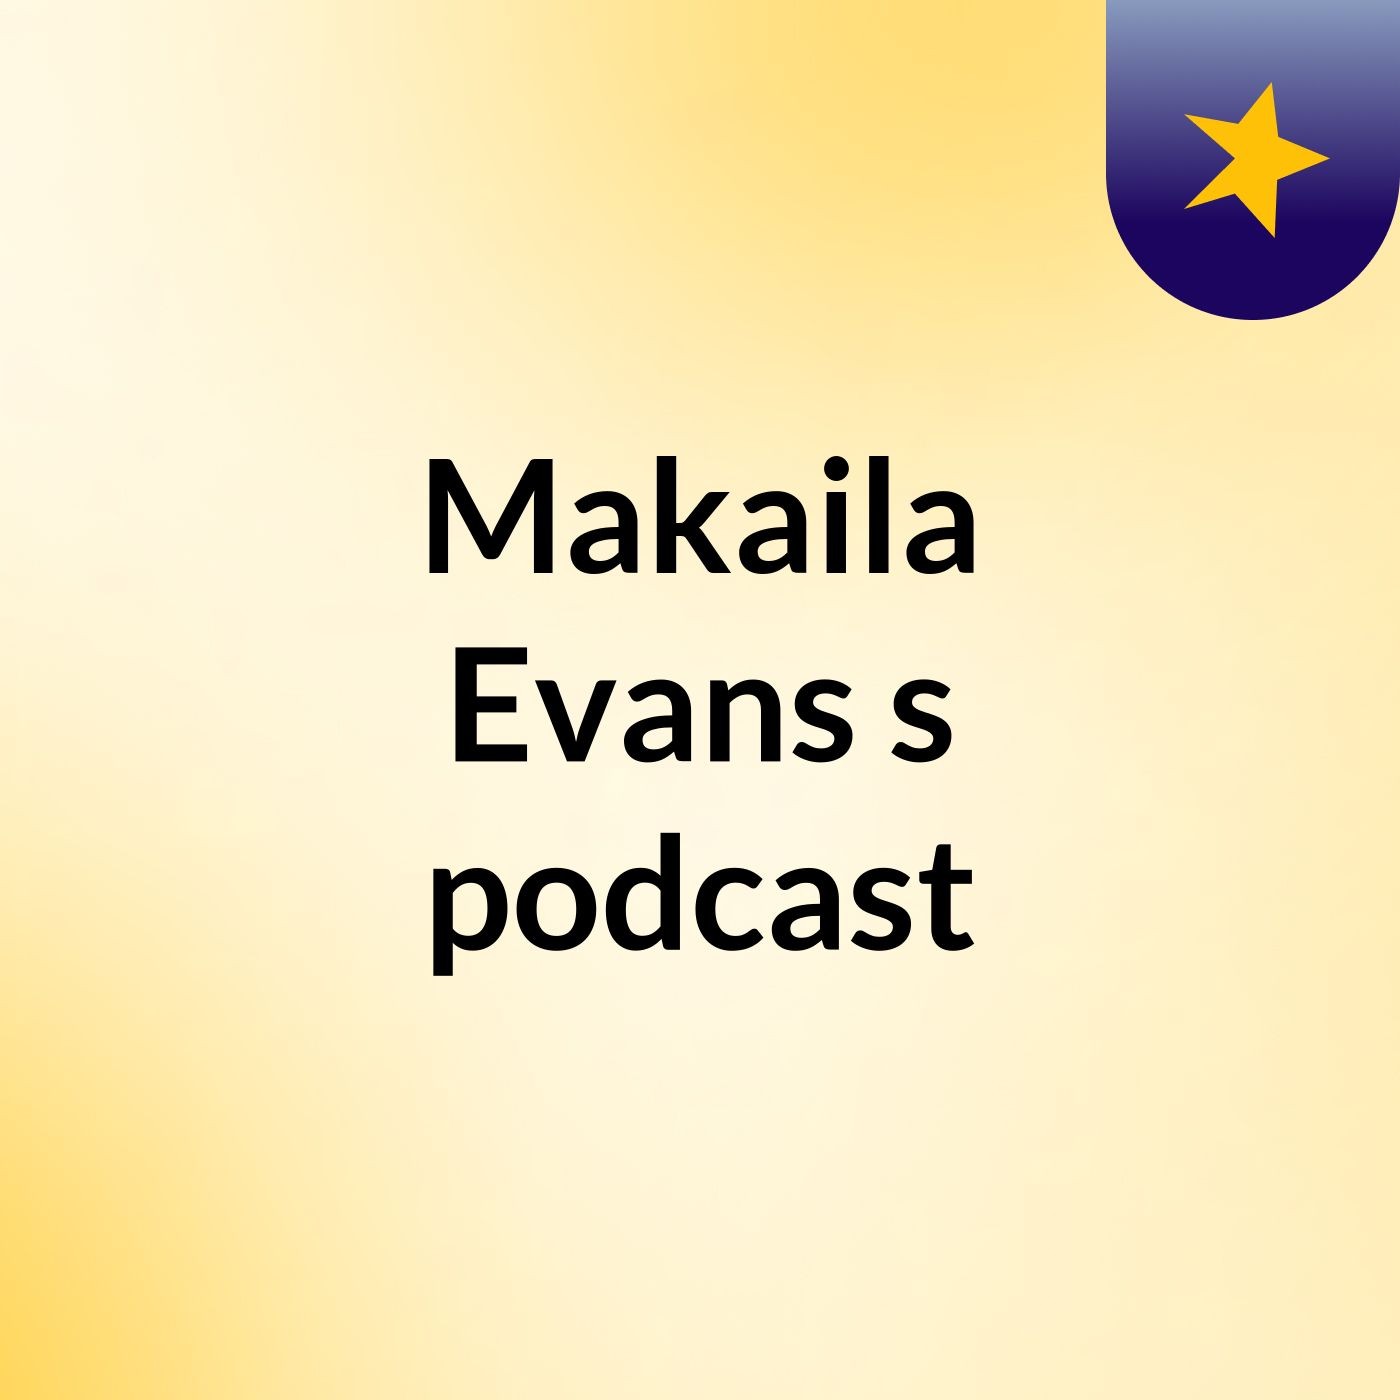 Makaila Evans's podcast